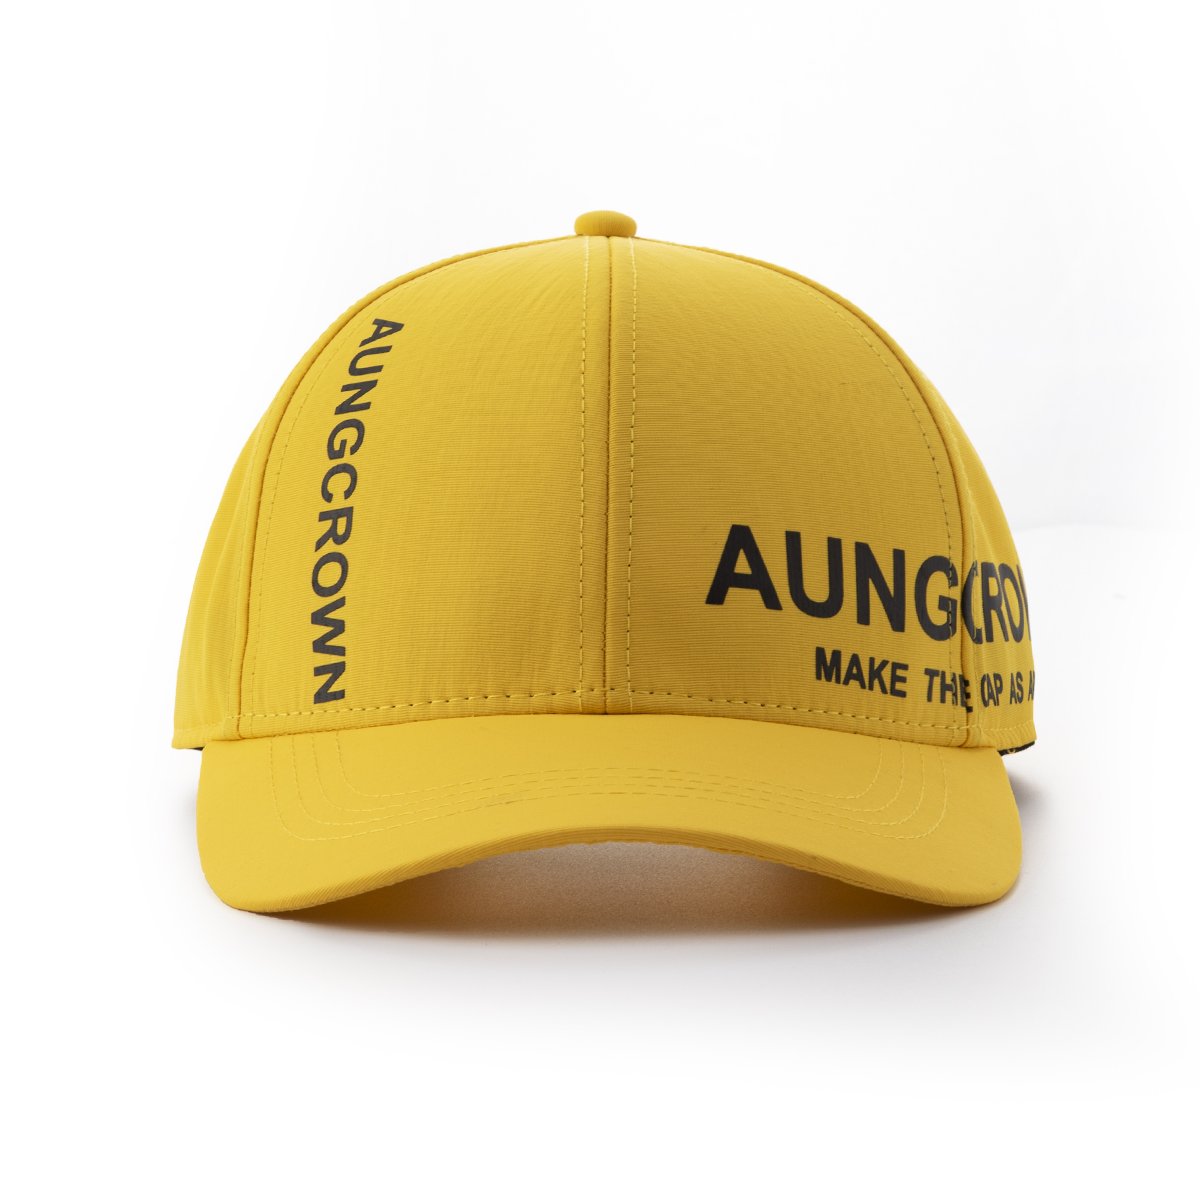 AungCrown designed 100% cotton classic adjustable sport baseball cap